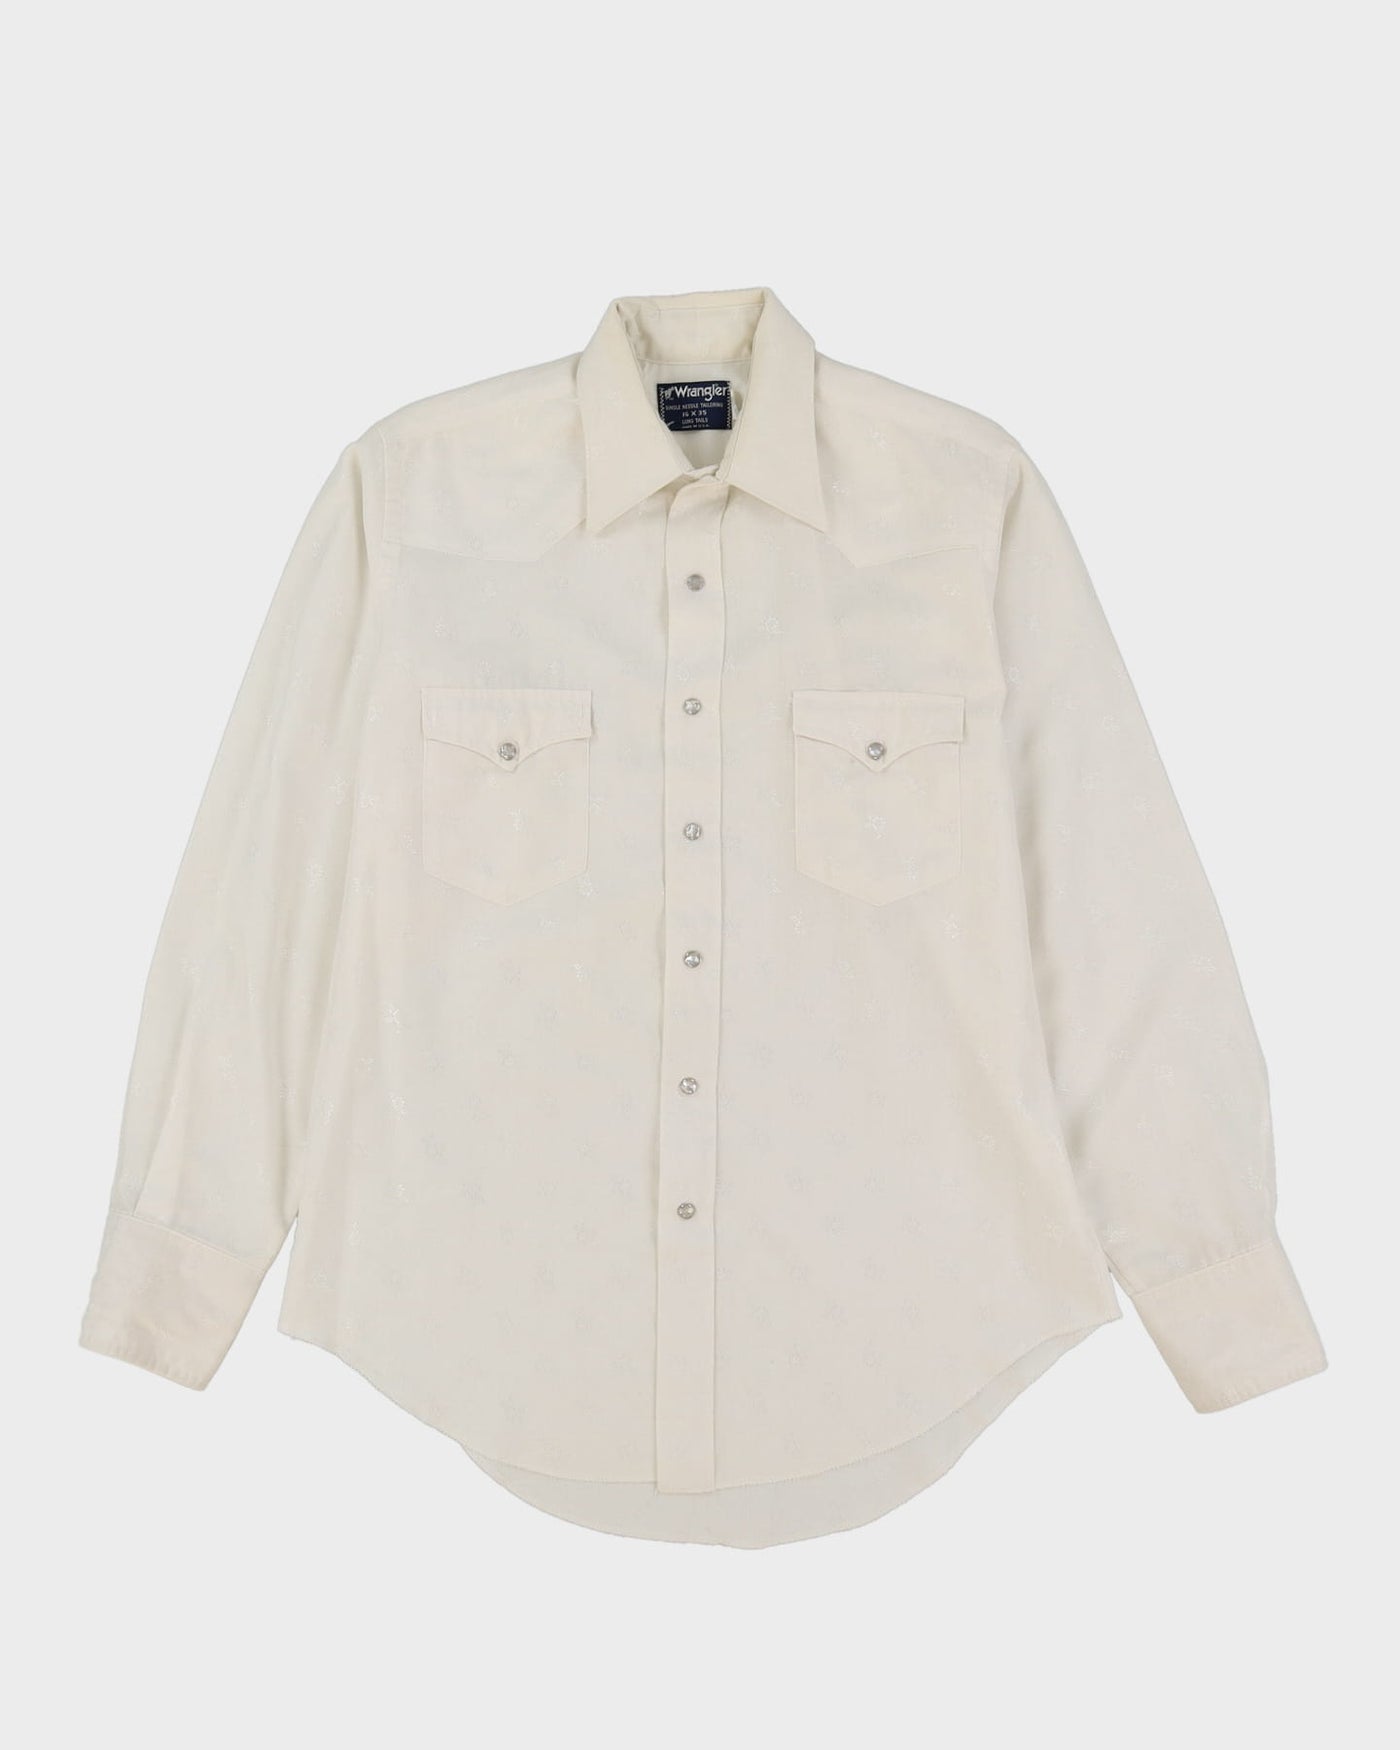 80s Wrangler White Patterned Western Style Shirt - L